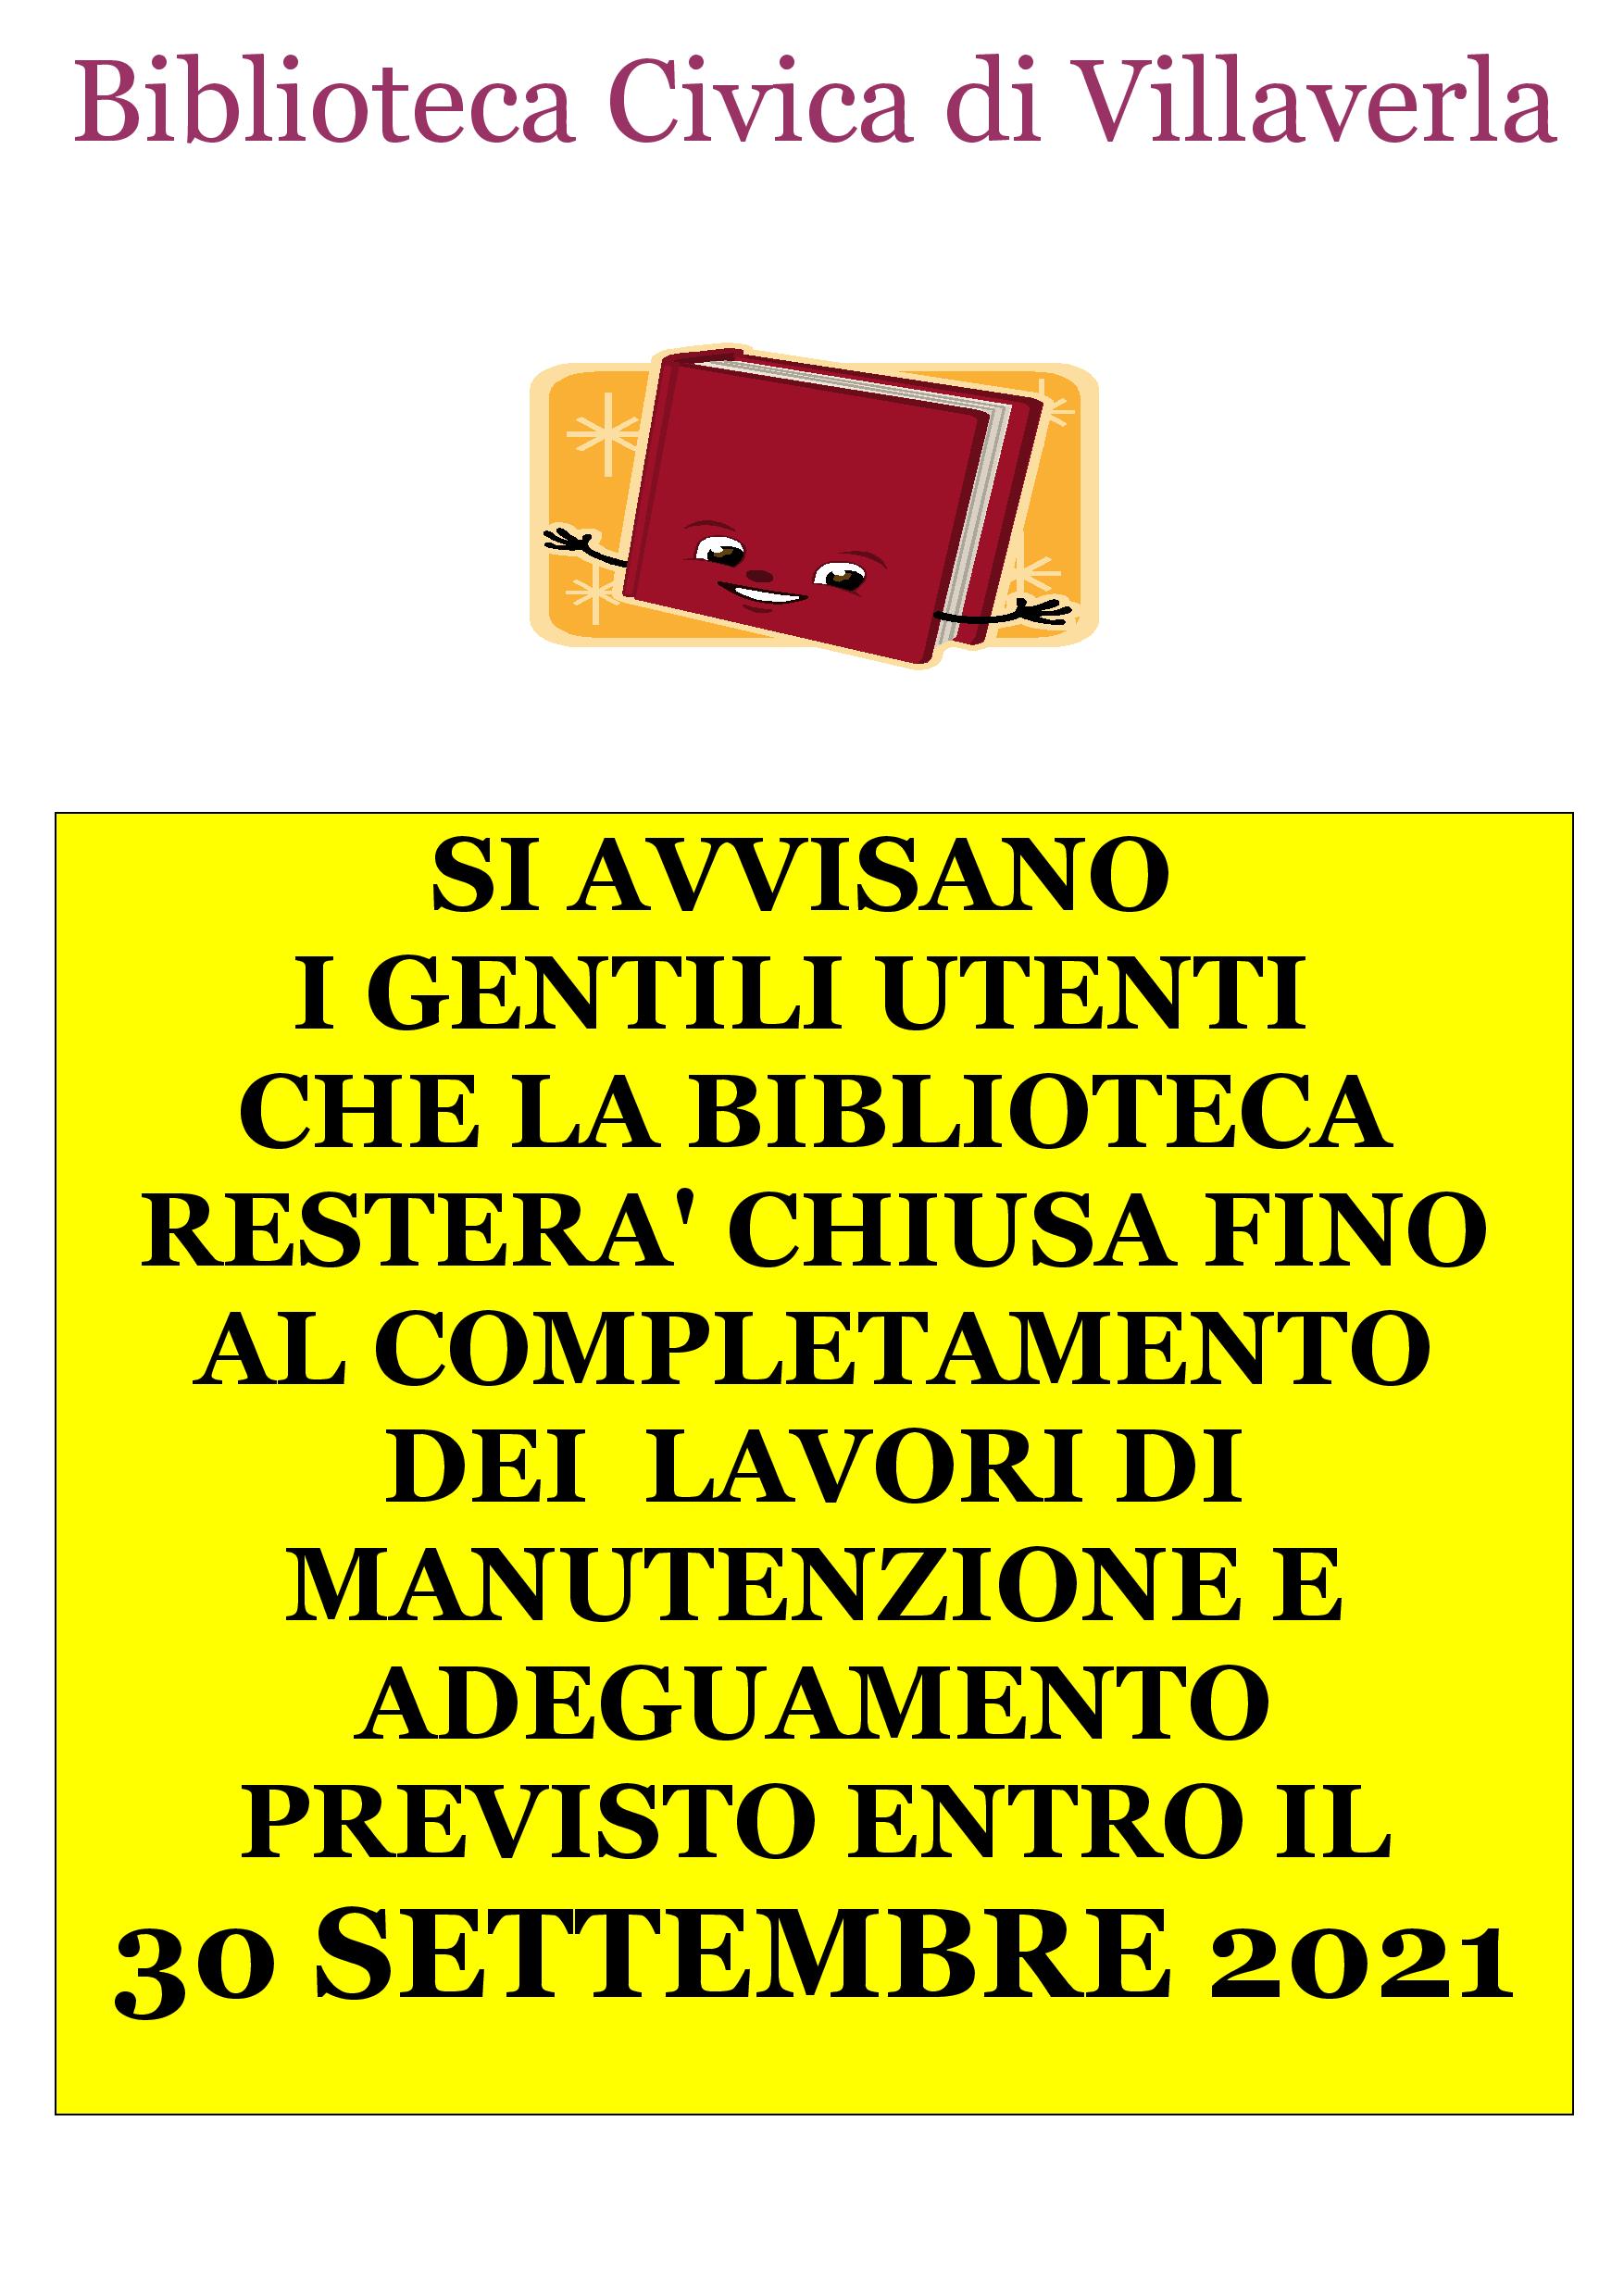 cartello chiusura biblitoeca per lavori